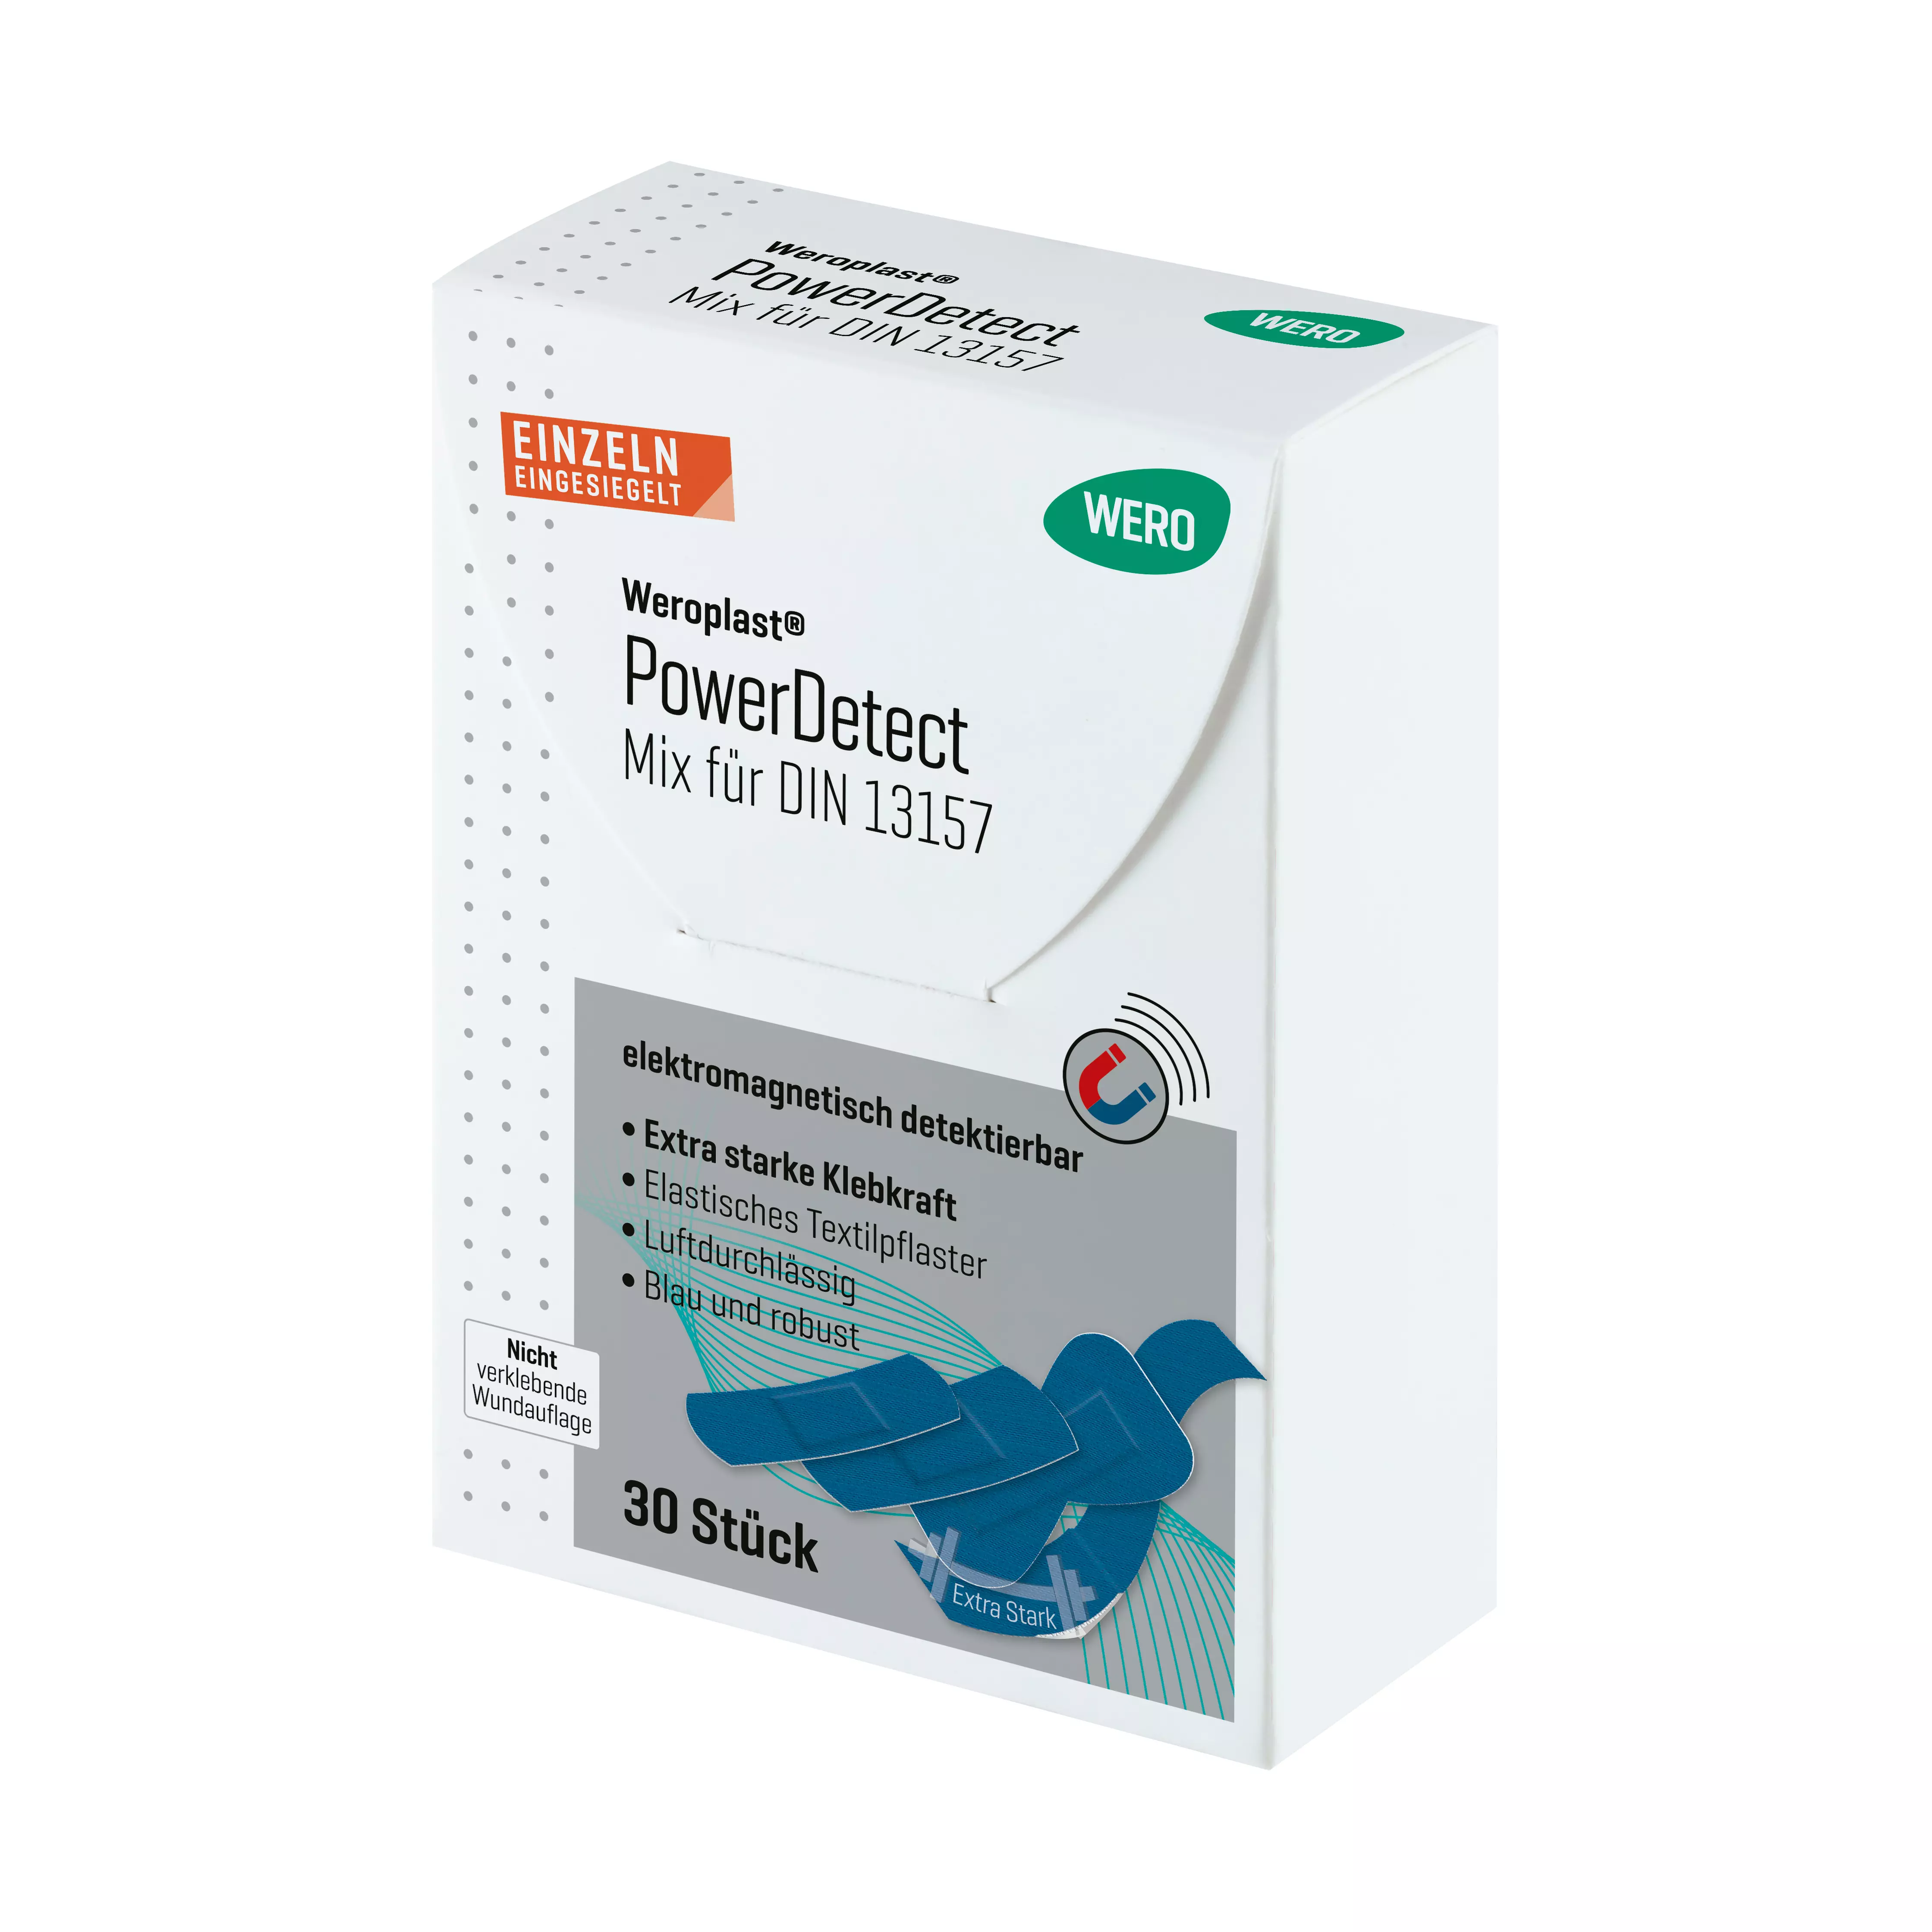 Plaster set Weroplast® PowerDetect - Mix DIN 13157